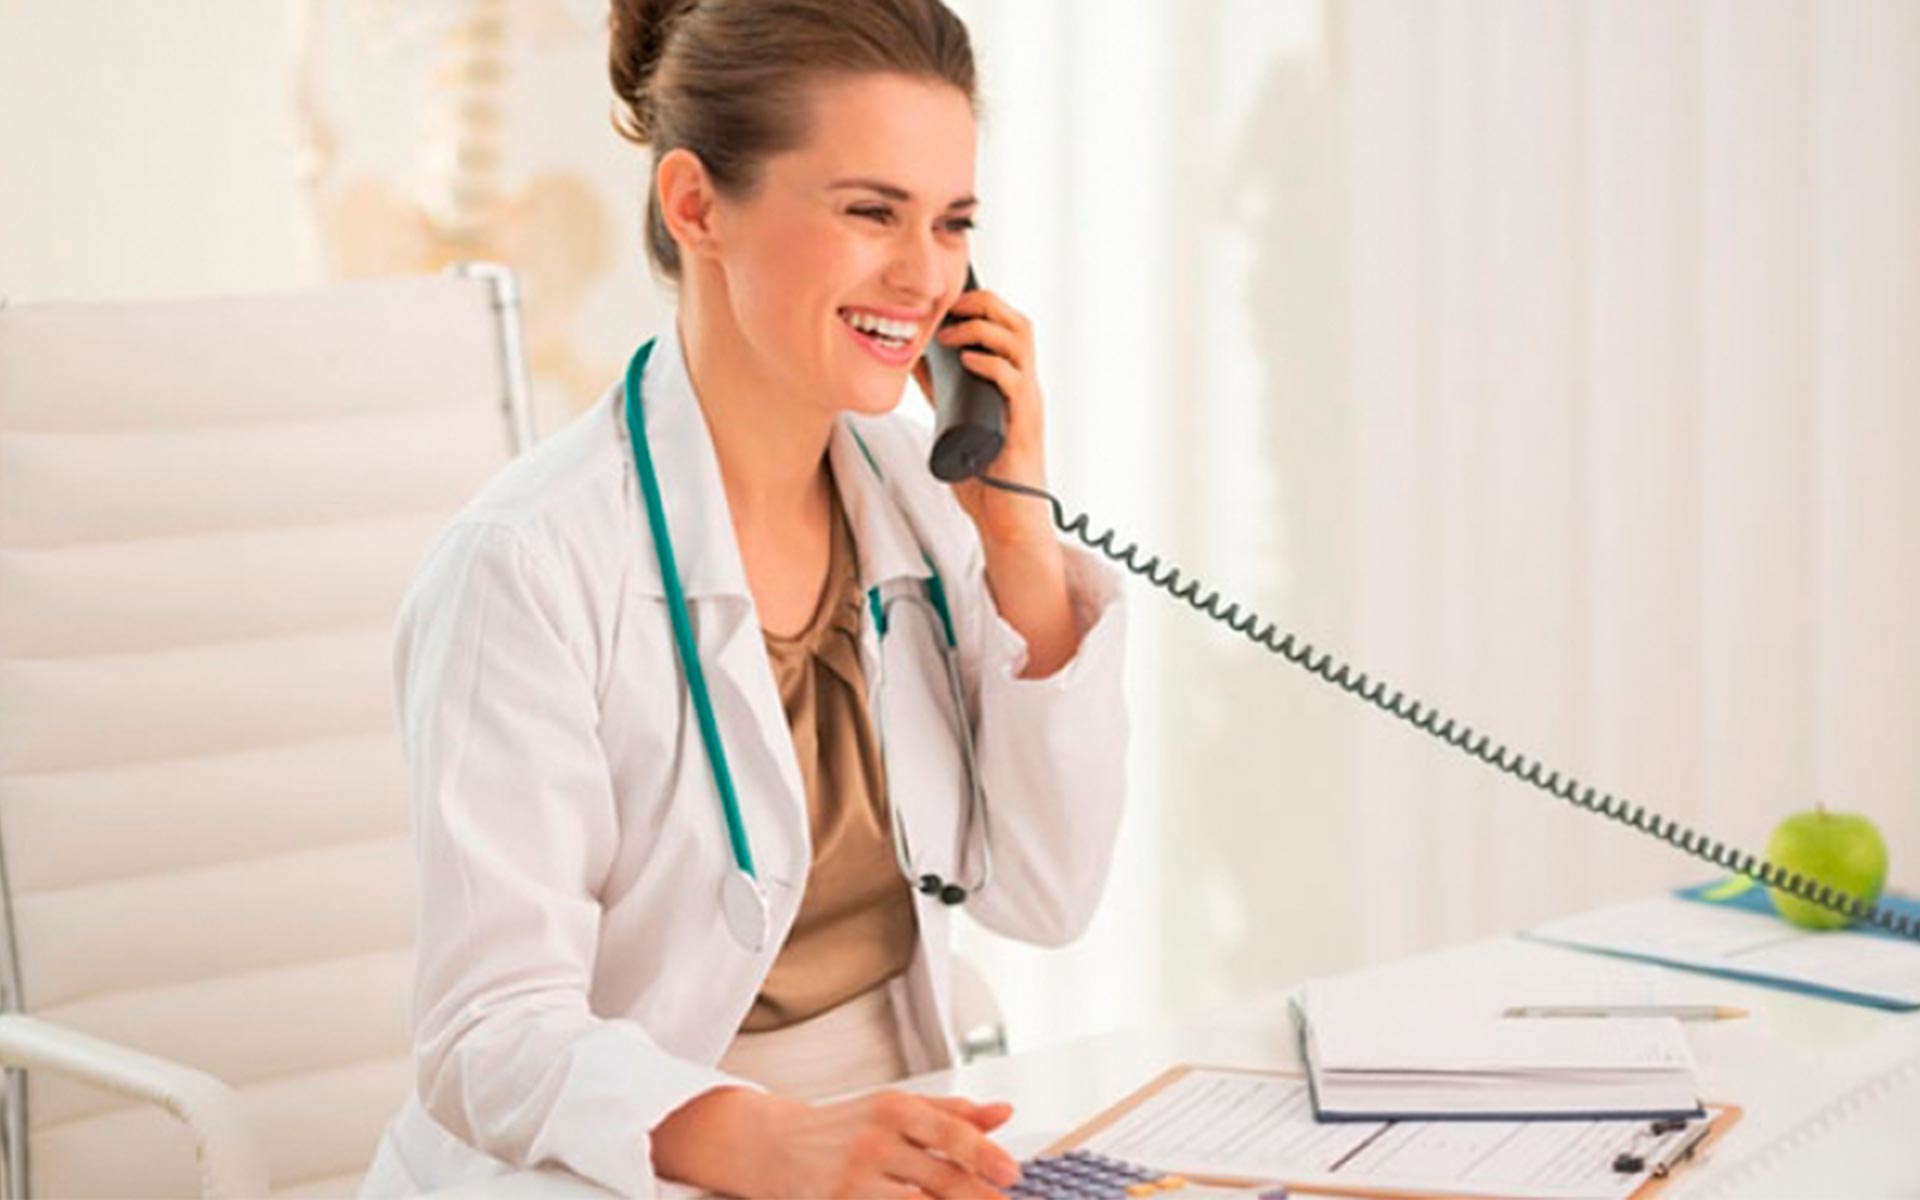 Orientación médica telefónica - Quality Assist